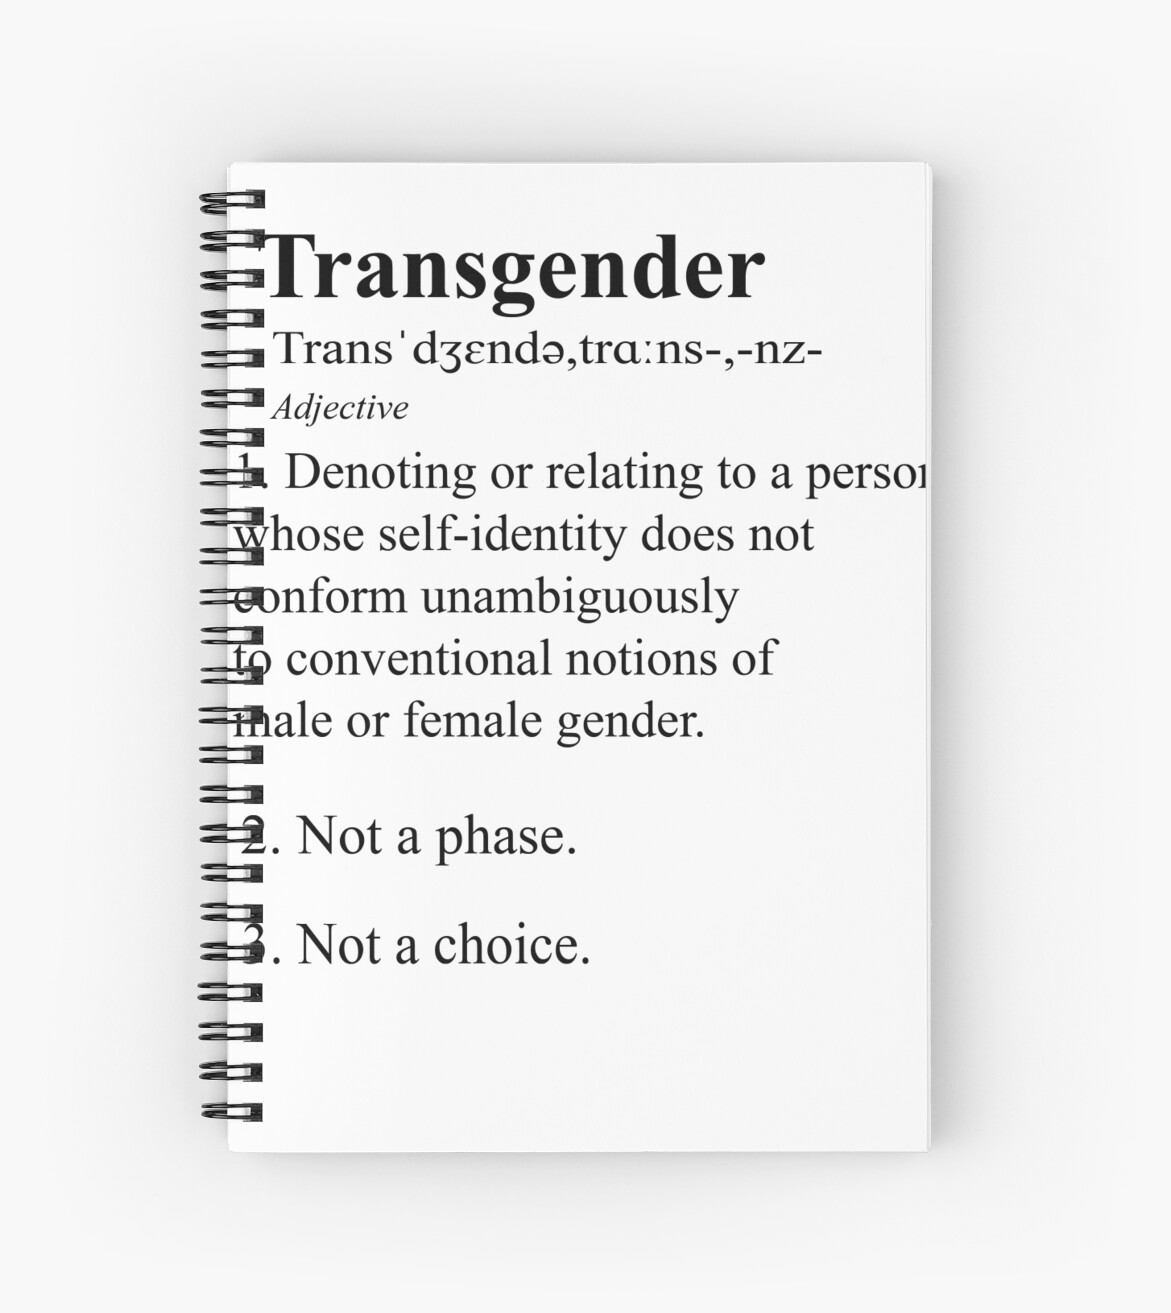 definition of transgender" spiral notebooks by nationalpride | redbubble